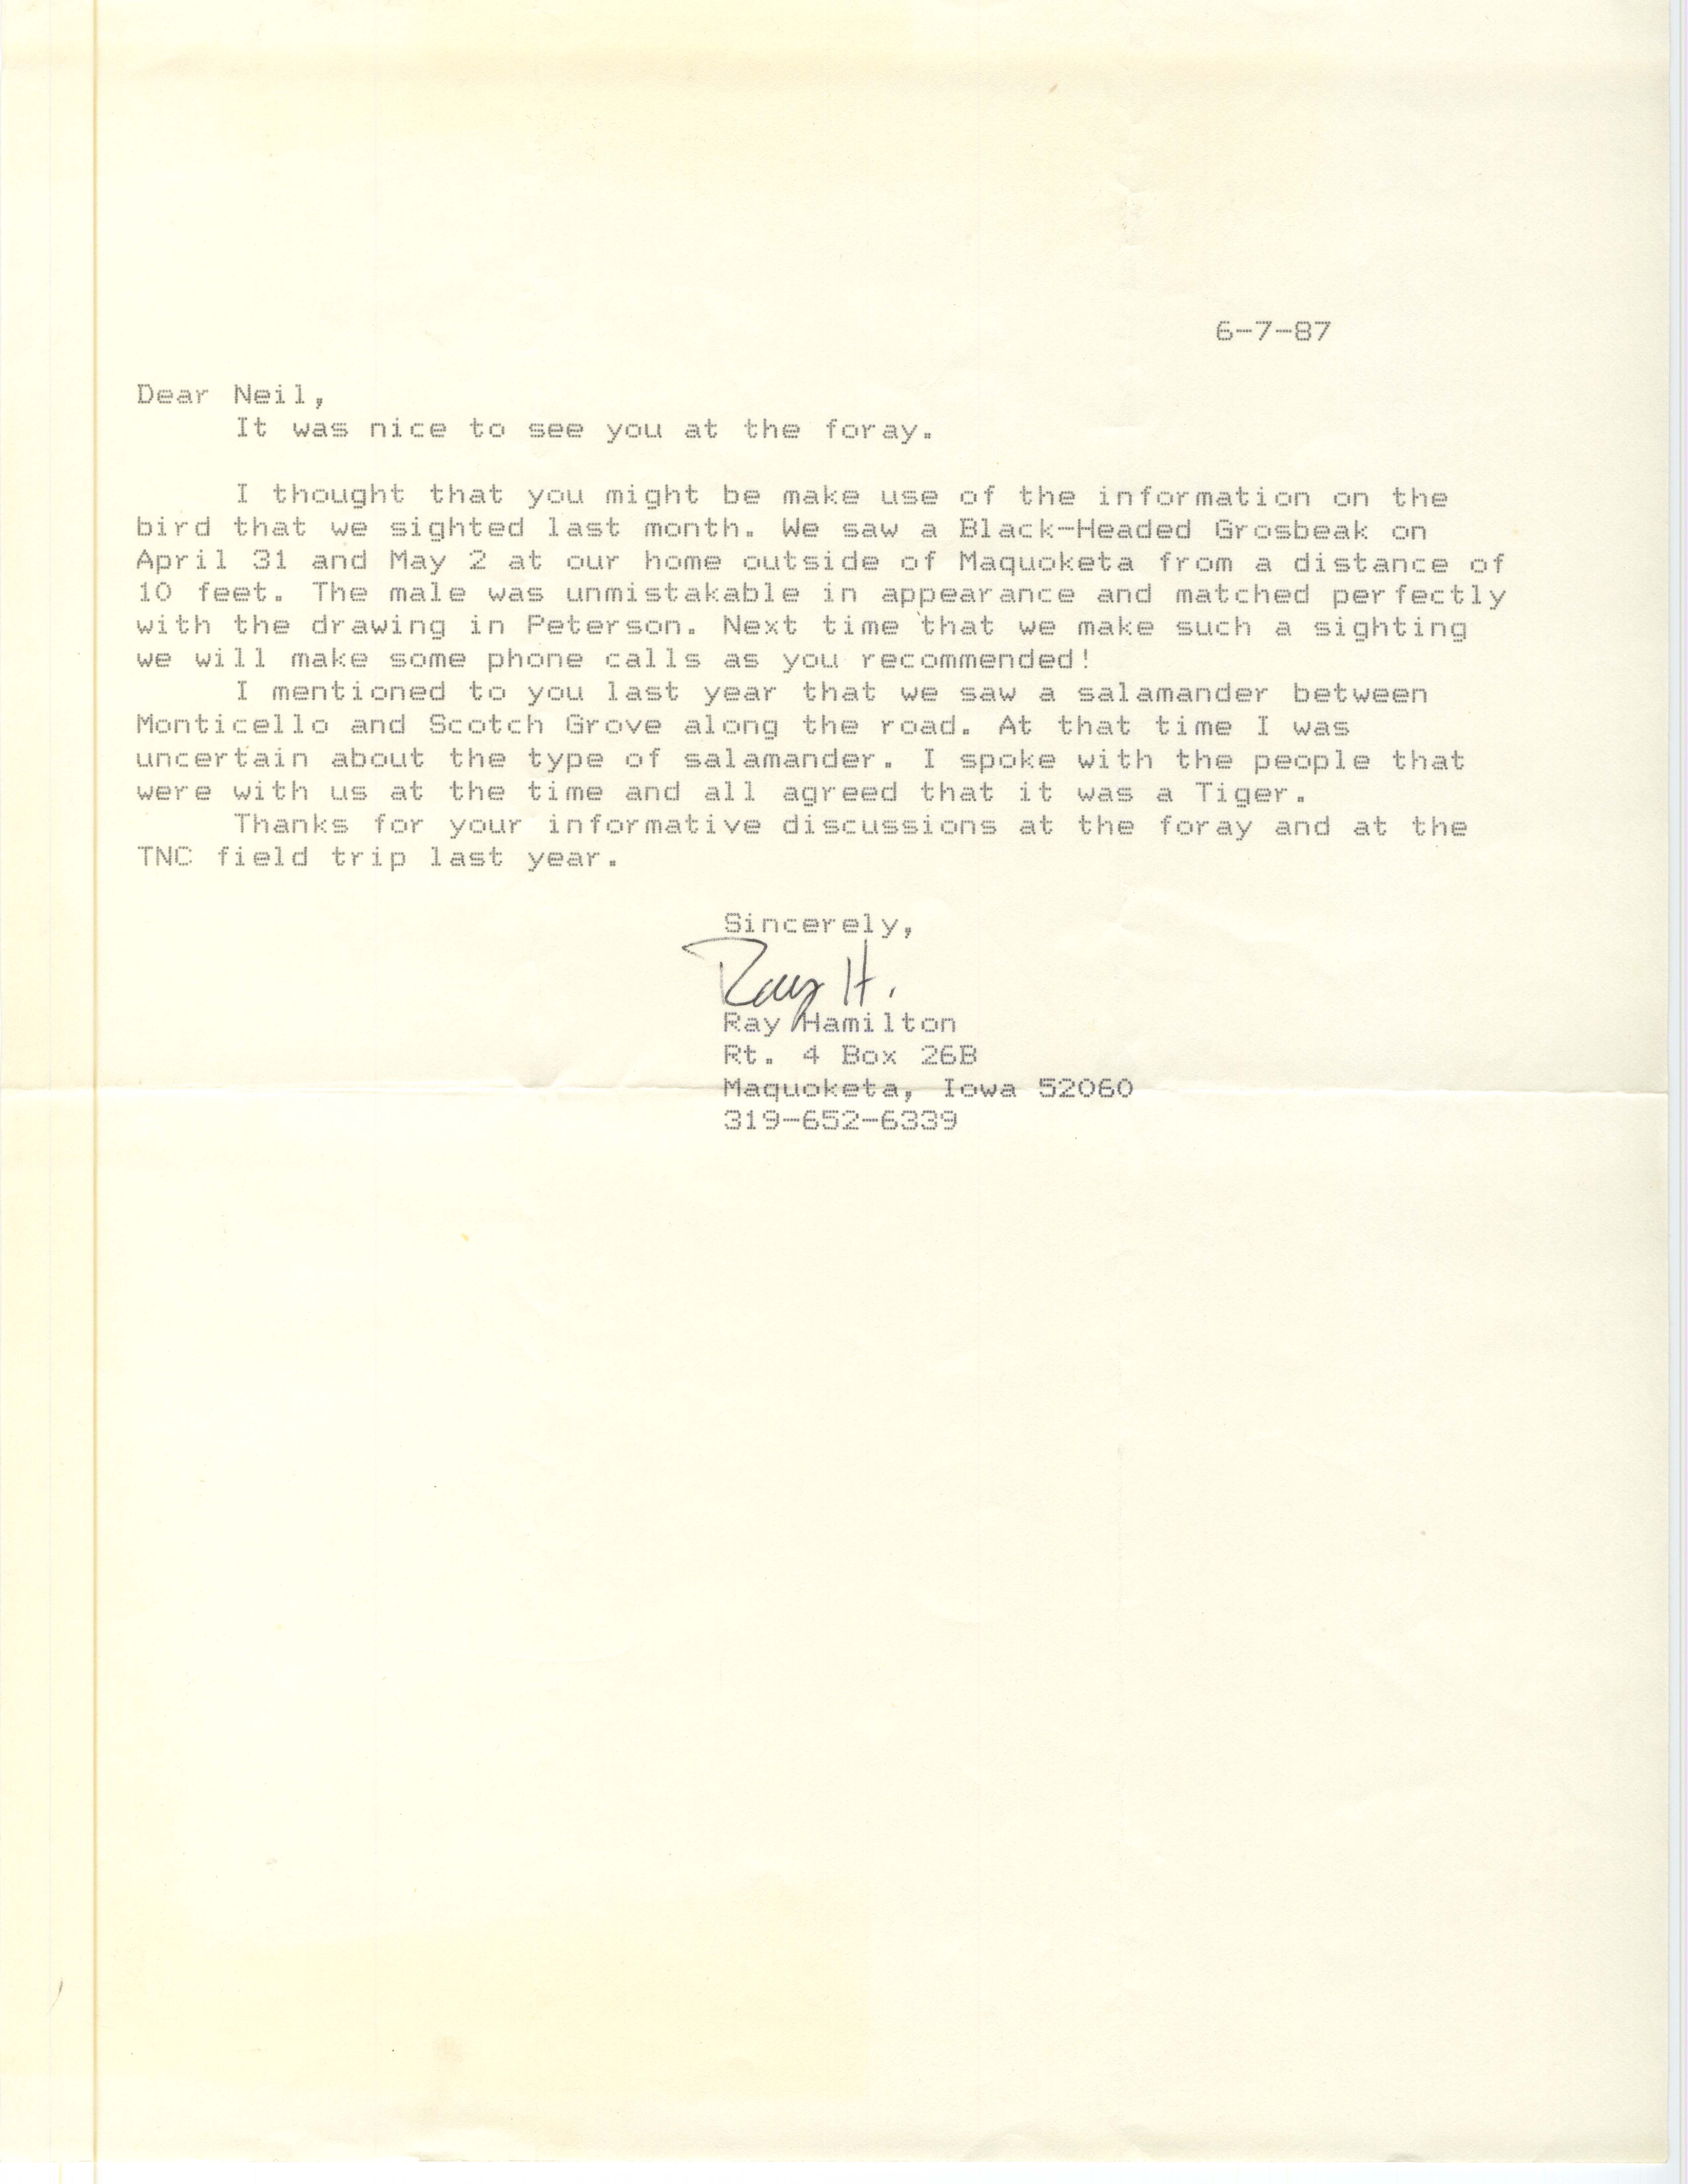 Ray Hamilton letter to Neil Bernstein regarding a  Black-headed Grosbeak sighting, June 7, 1987